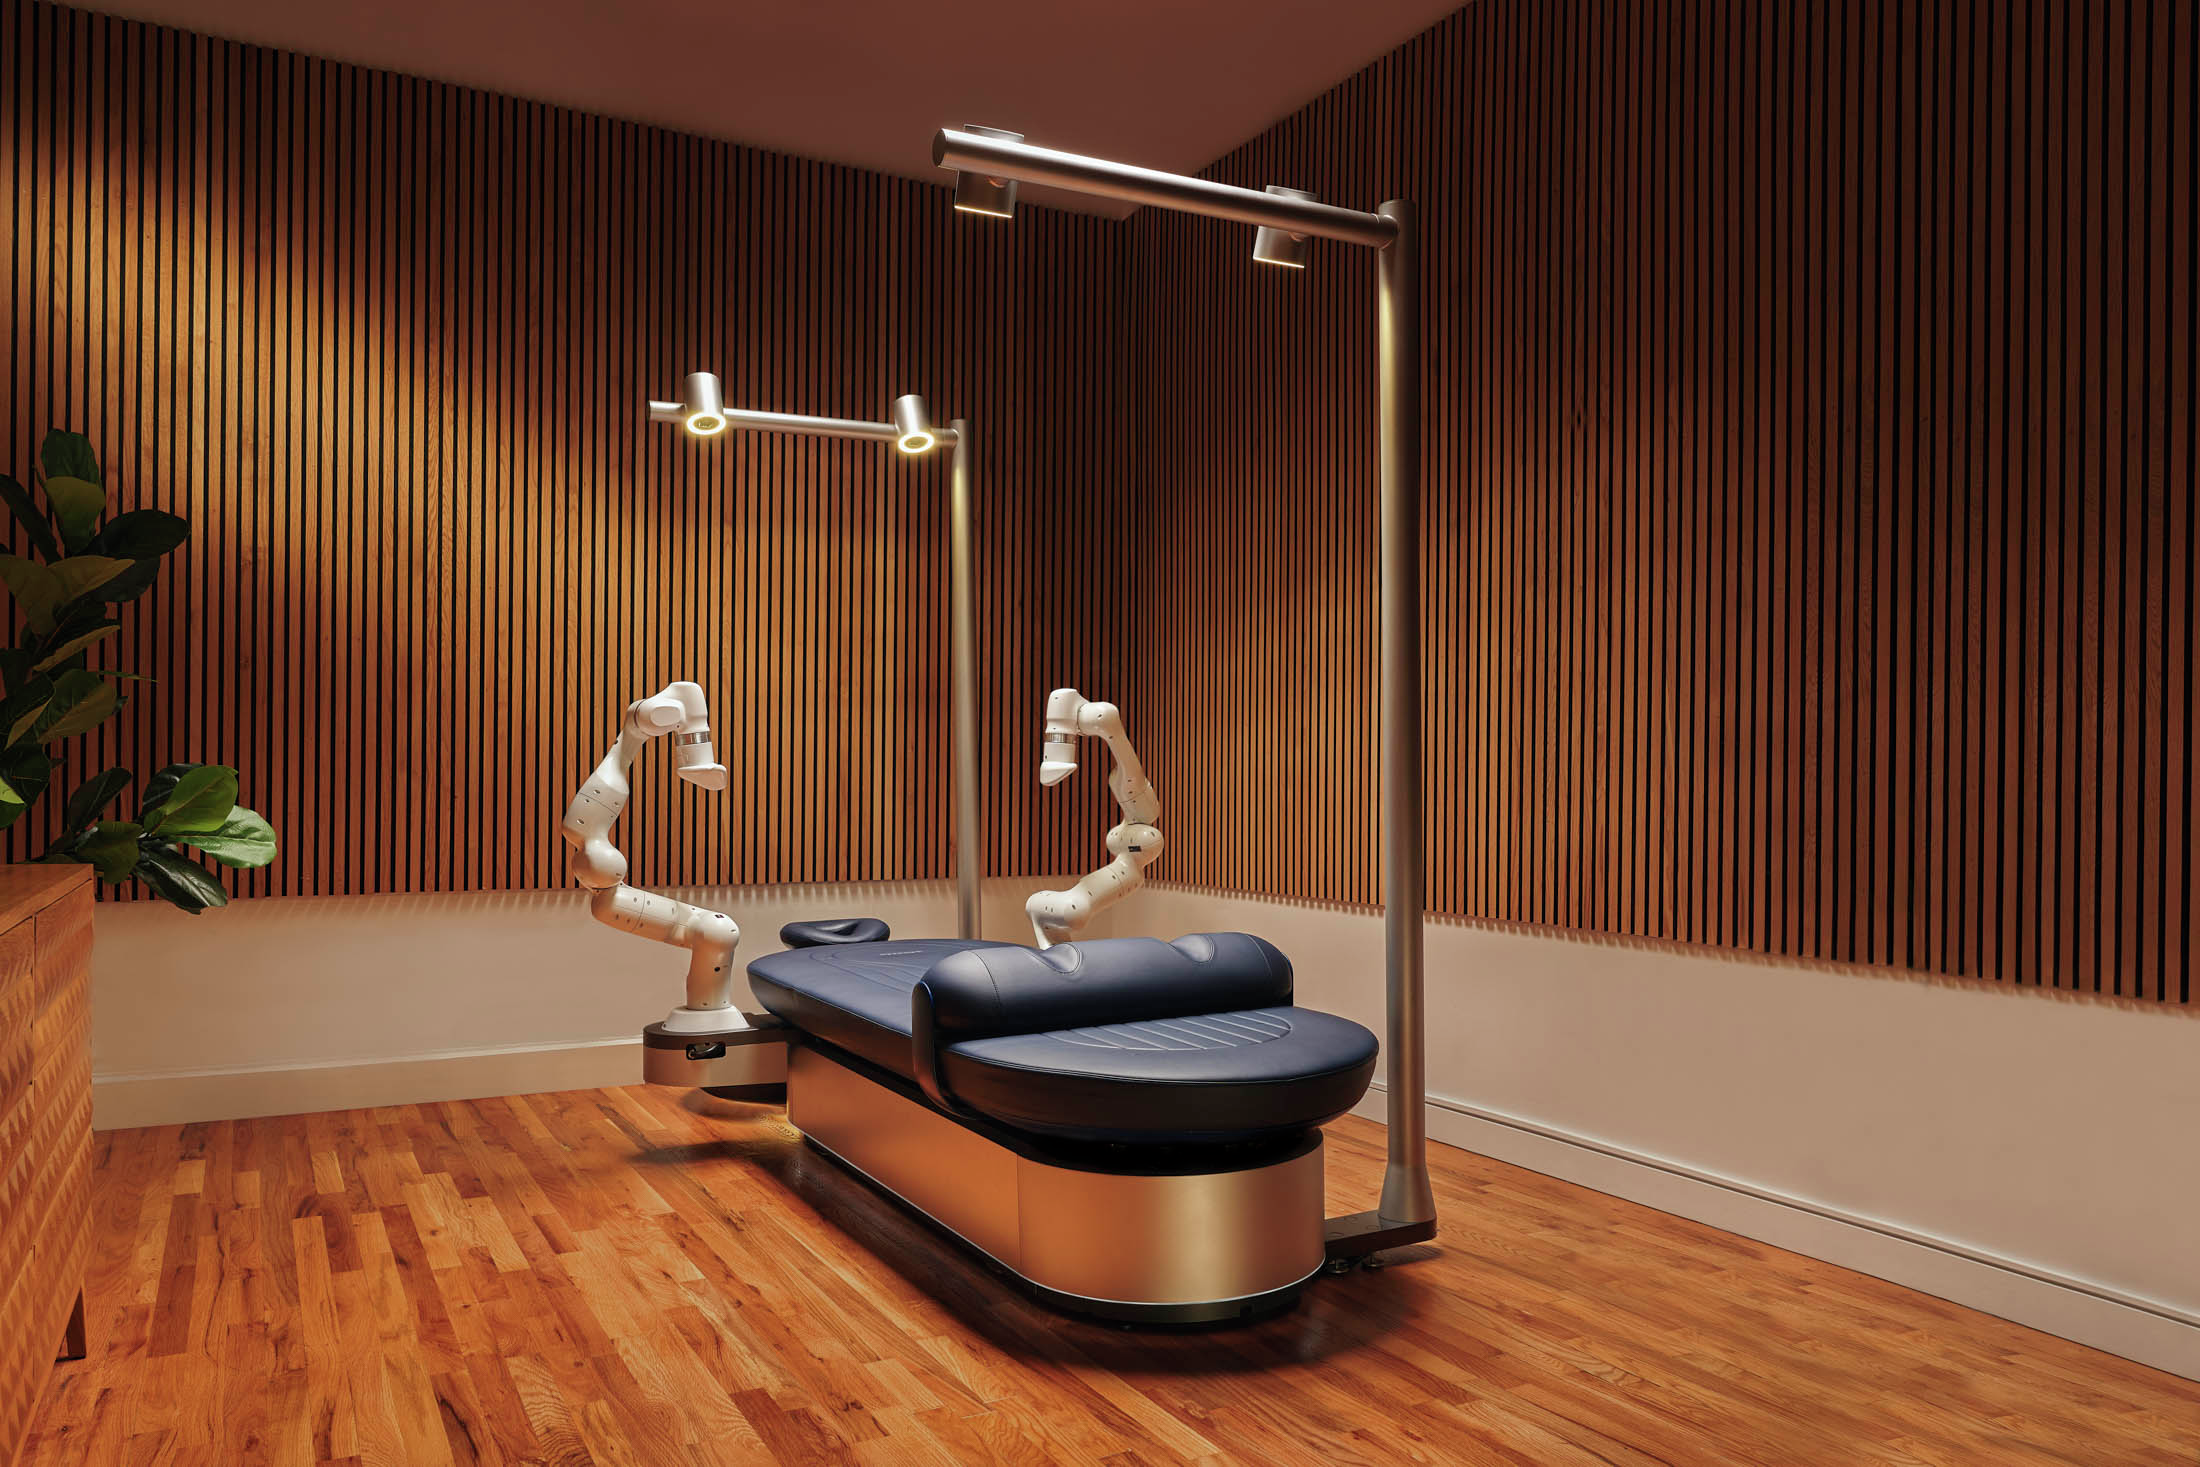 NEWSLINE: NYC hotel offers robotic massages